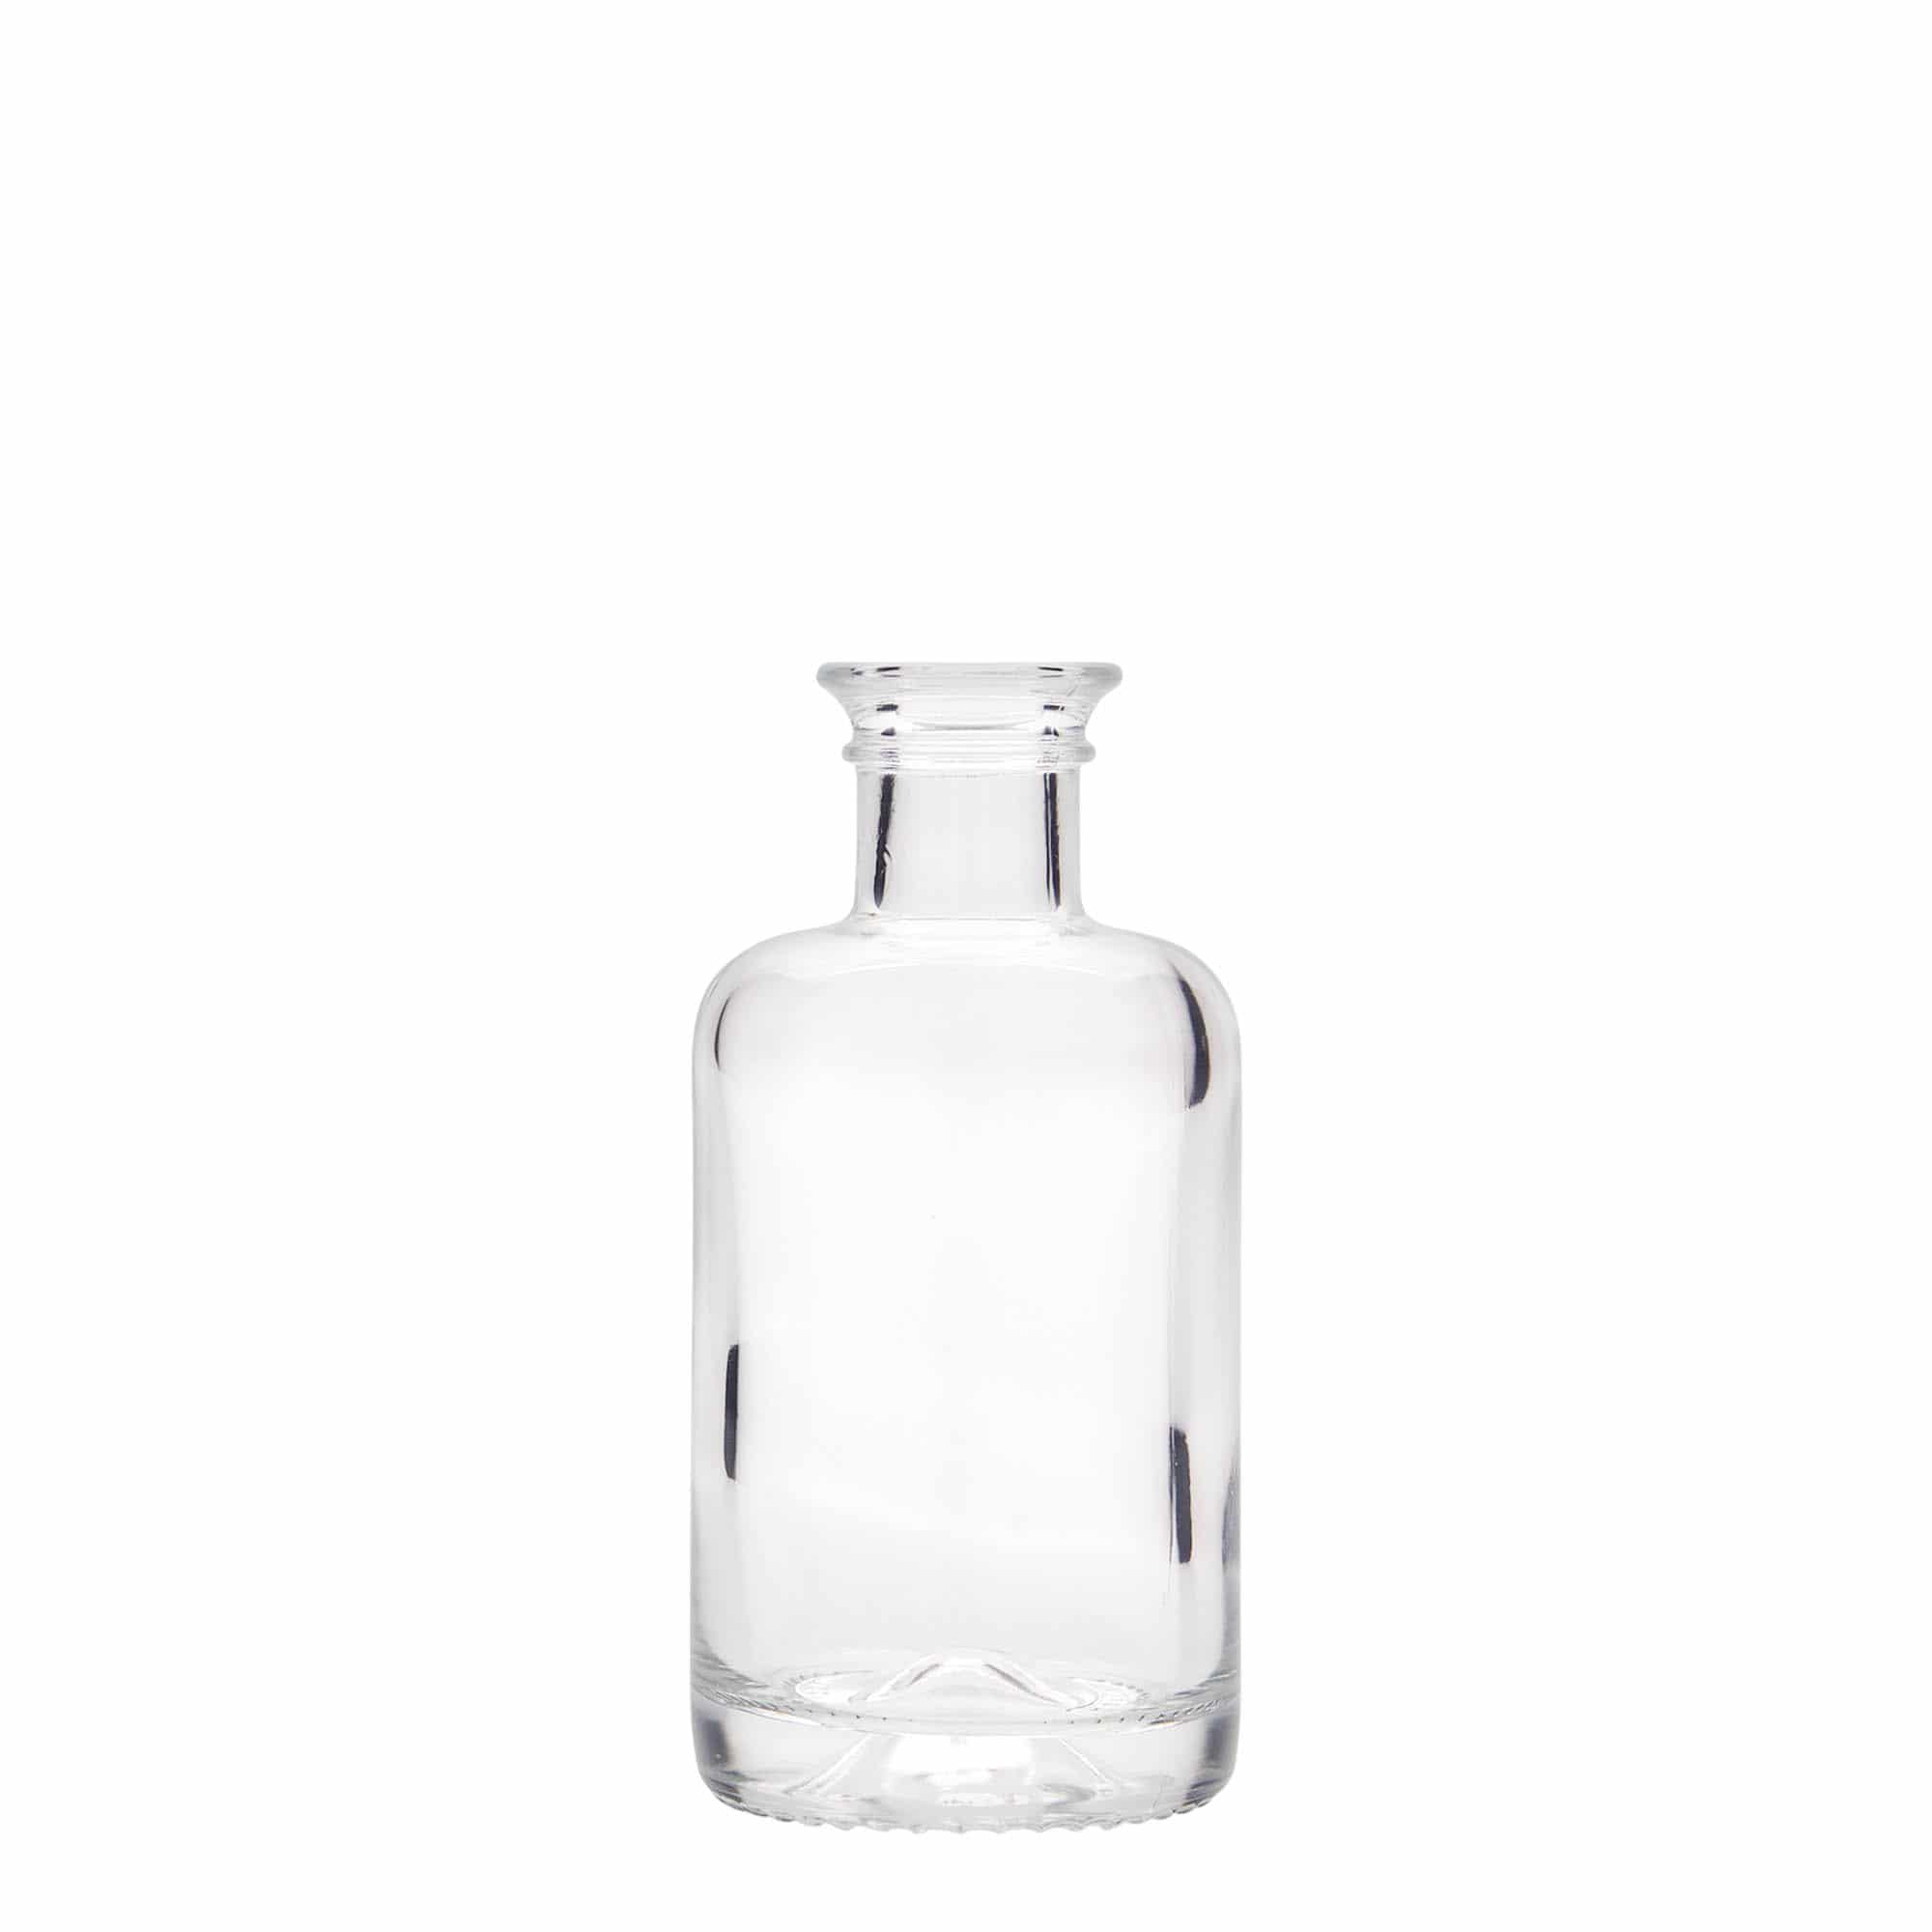 Botella de vidrio de farmacia de 100 ml, boca: corcho